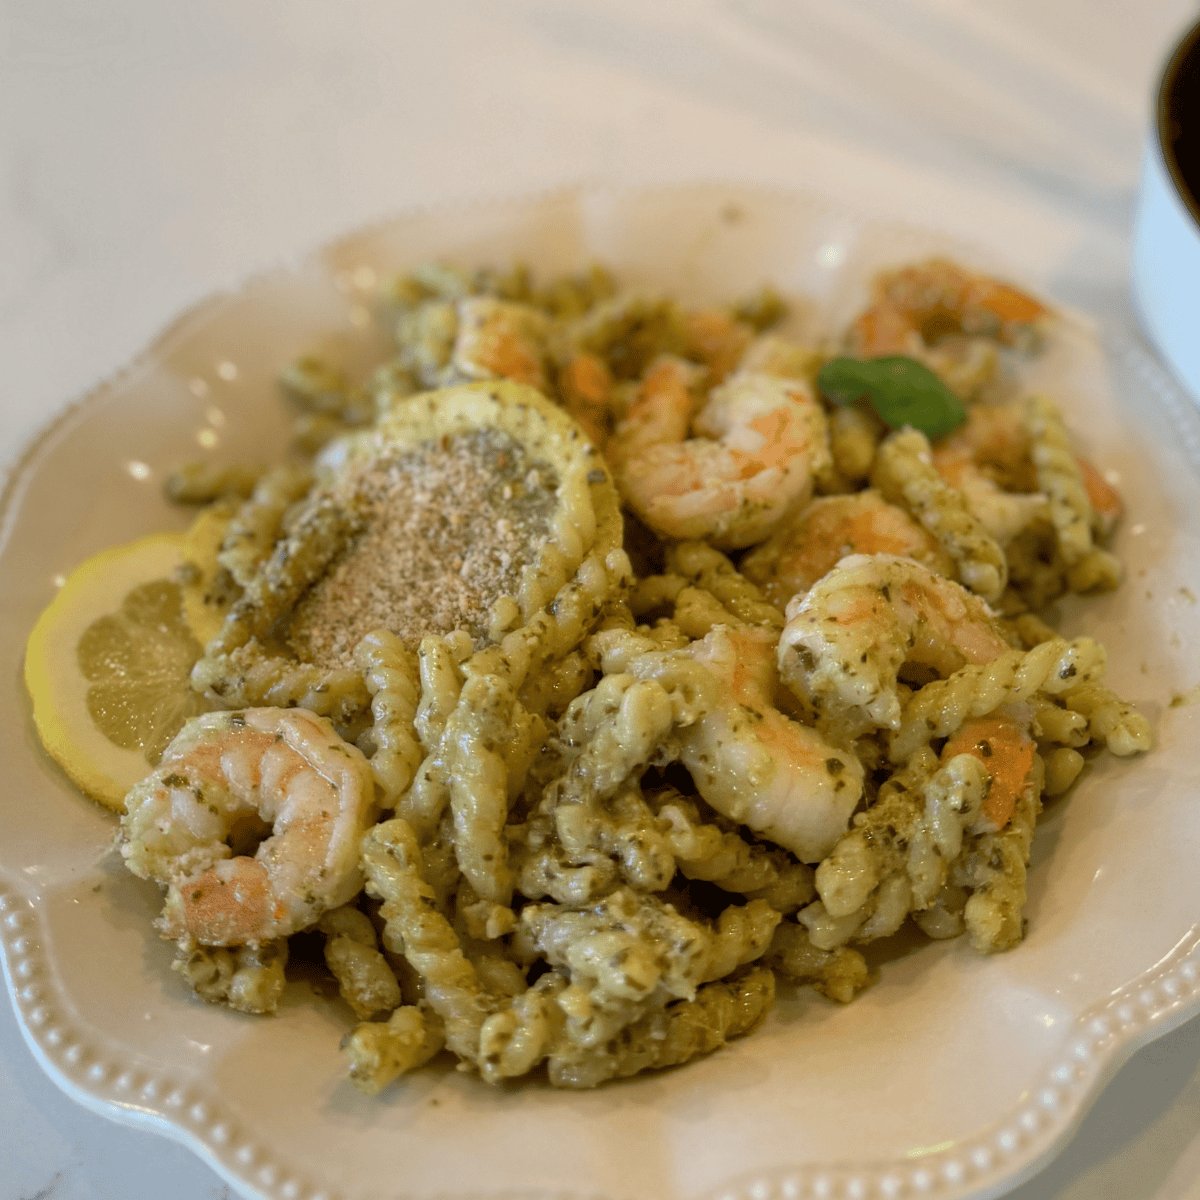 gemelli pasta with lemon pesto and shrimp dish - dinner recipe on plate